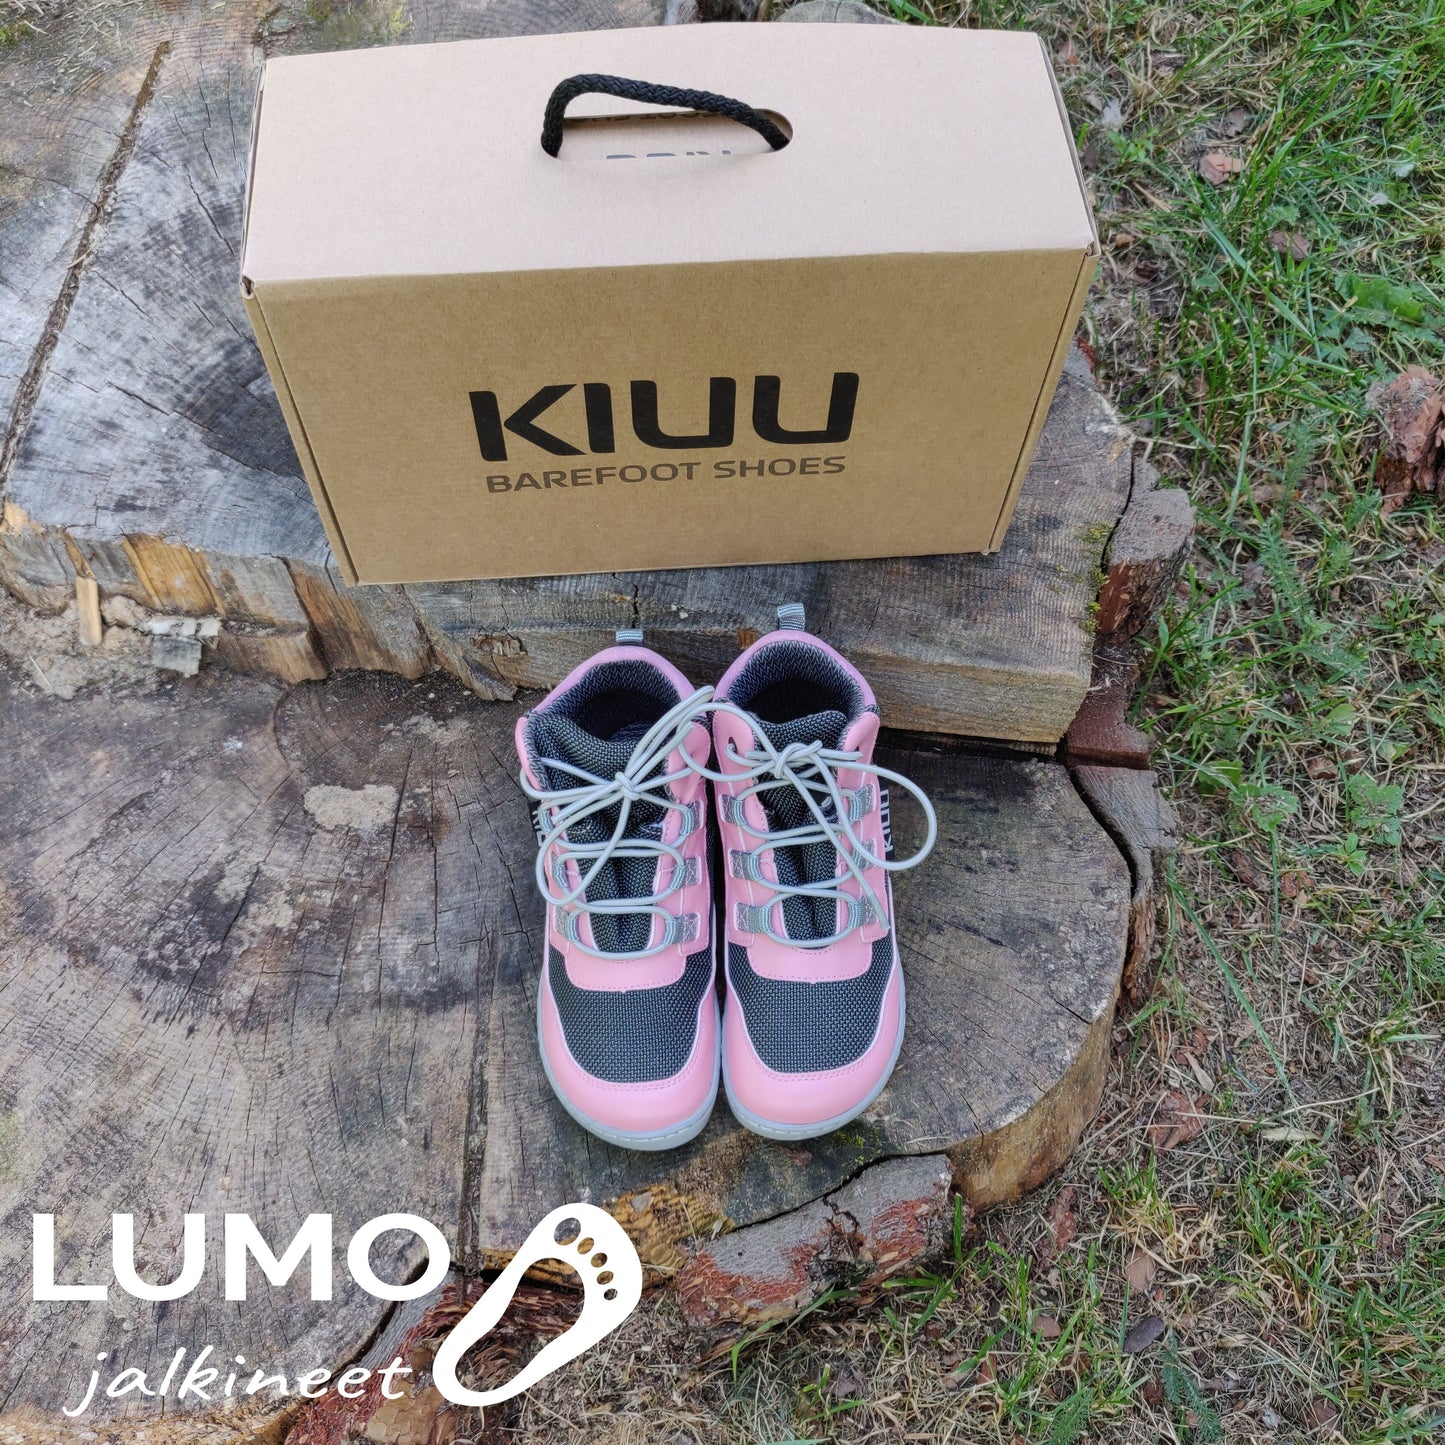 KIUU Atlas TEX barefoot shoes, Pink 29